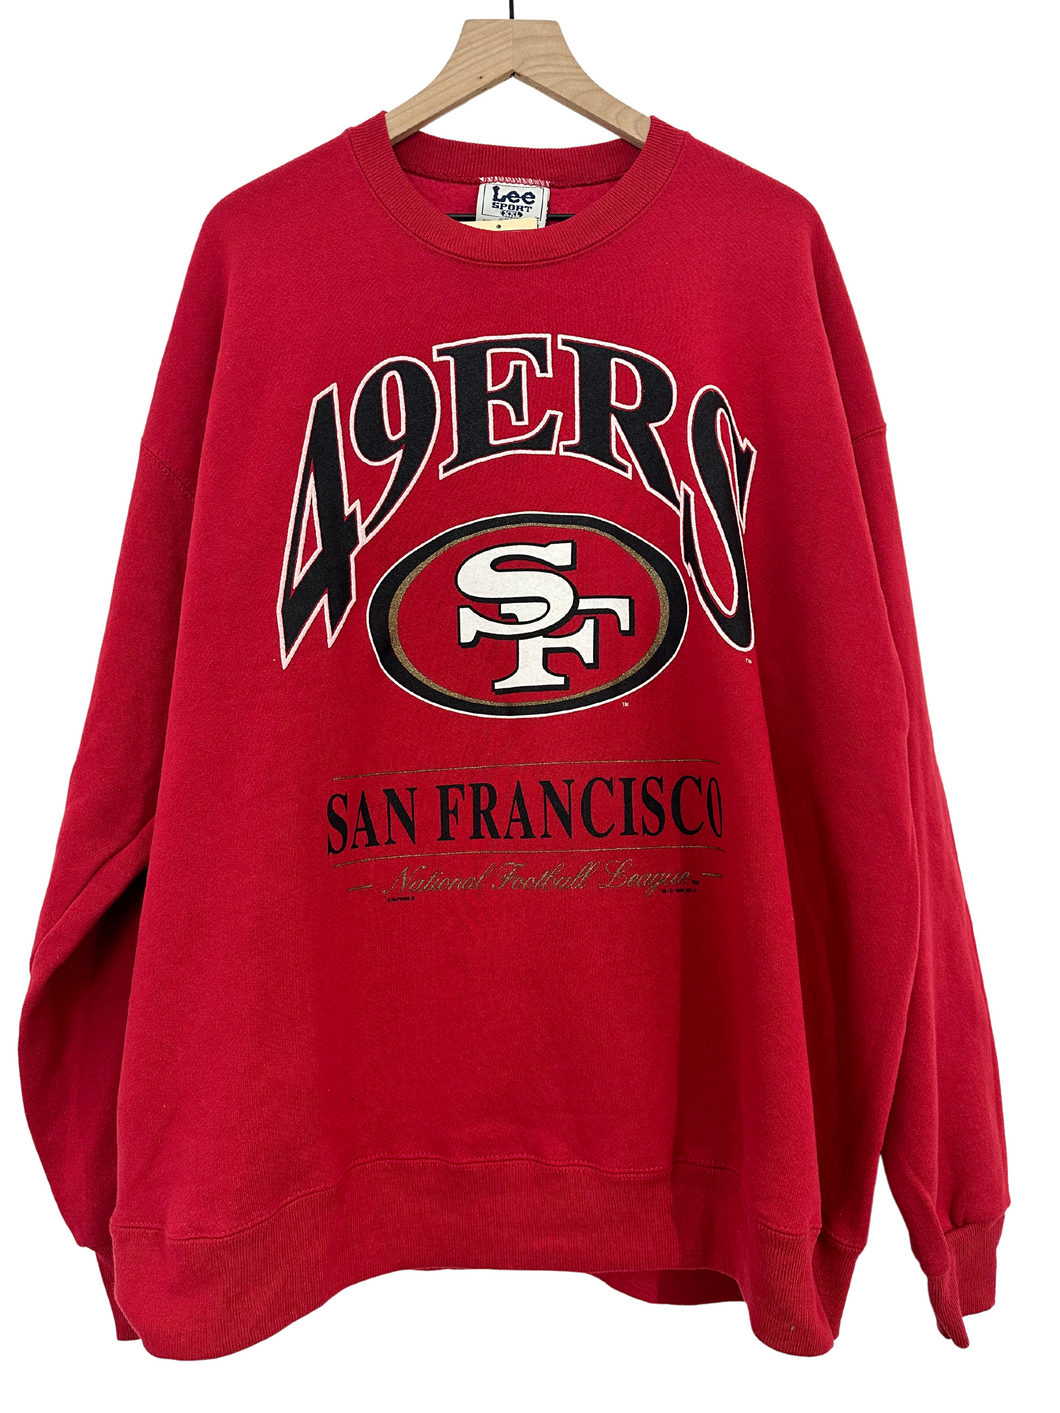 1995 Vintage Lee Sport San Francisco 49ers Crewneck Sweatshirt